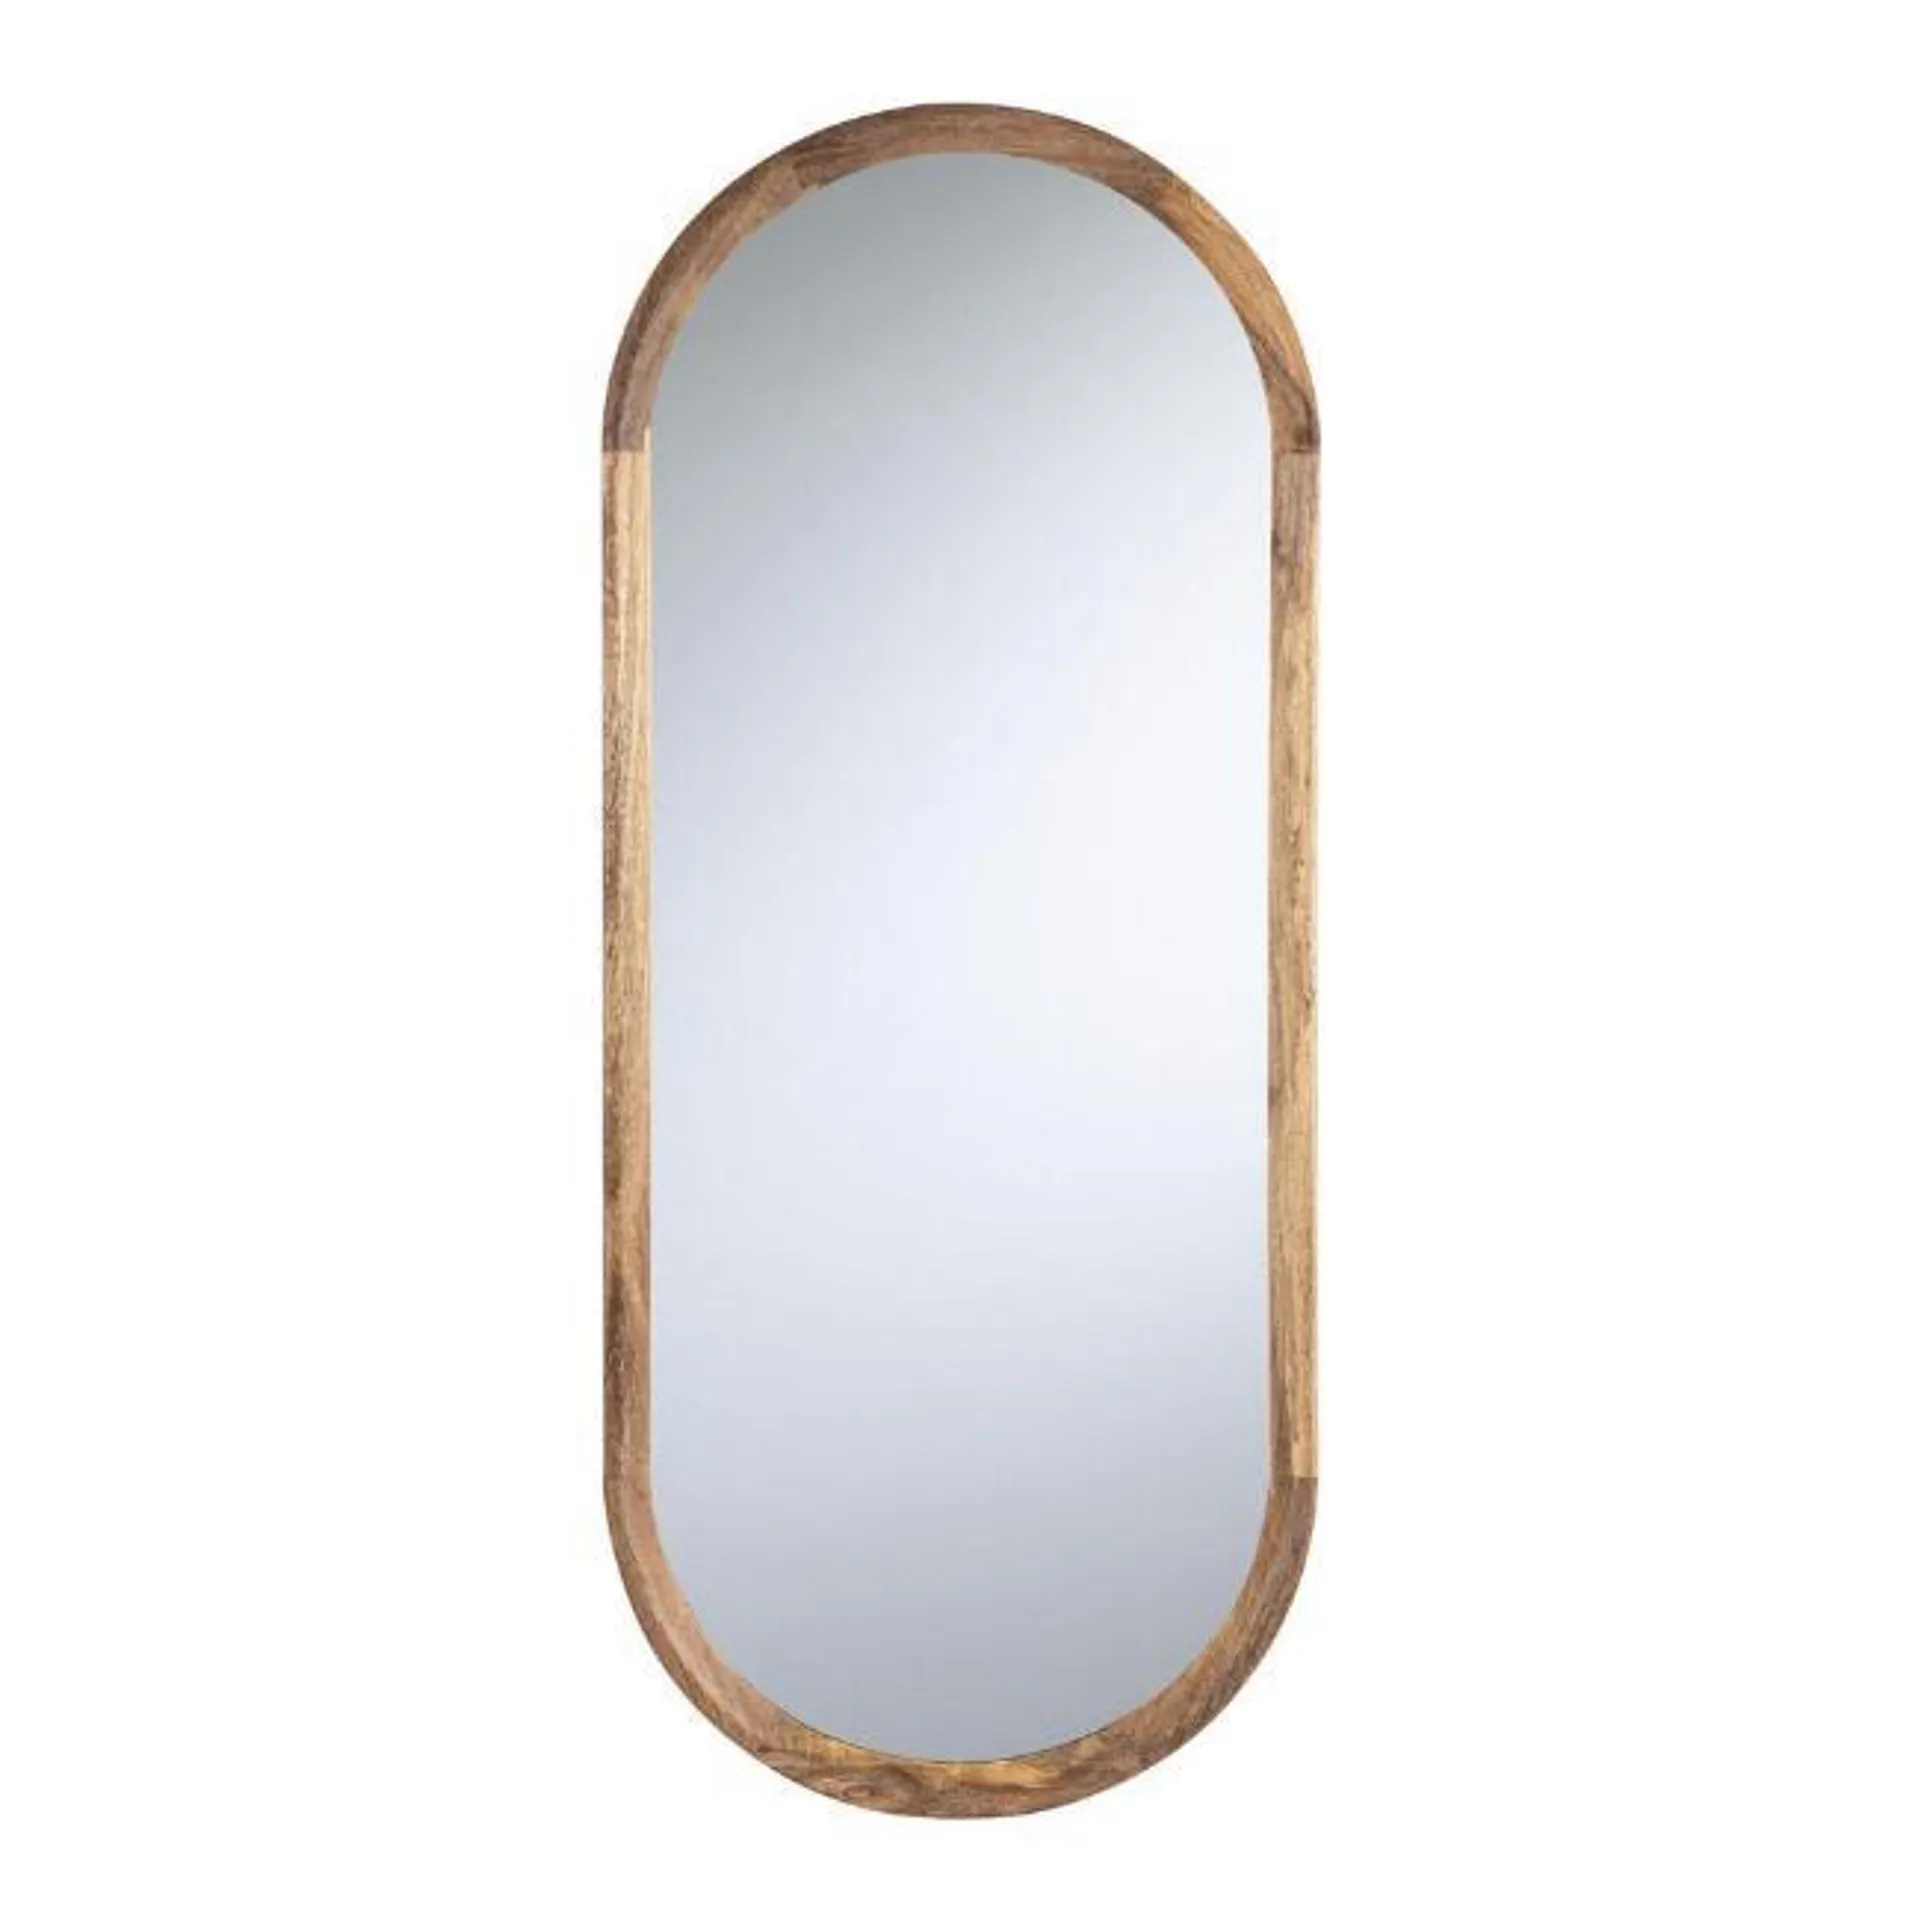 Oblong Natural Wood Full Length Mirror